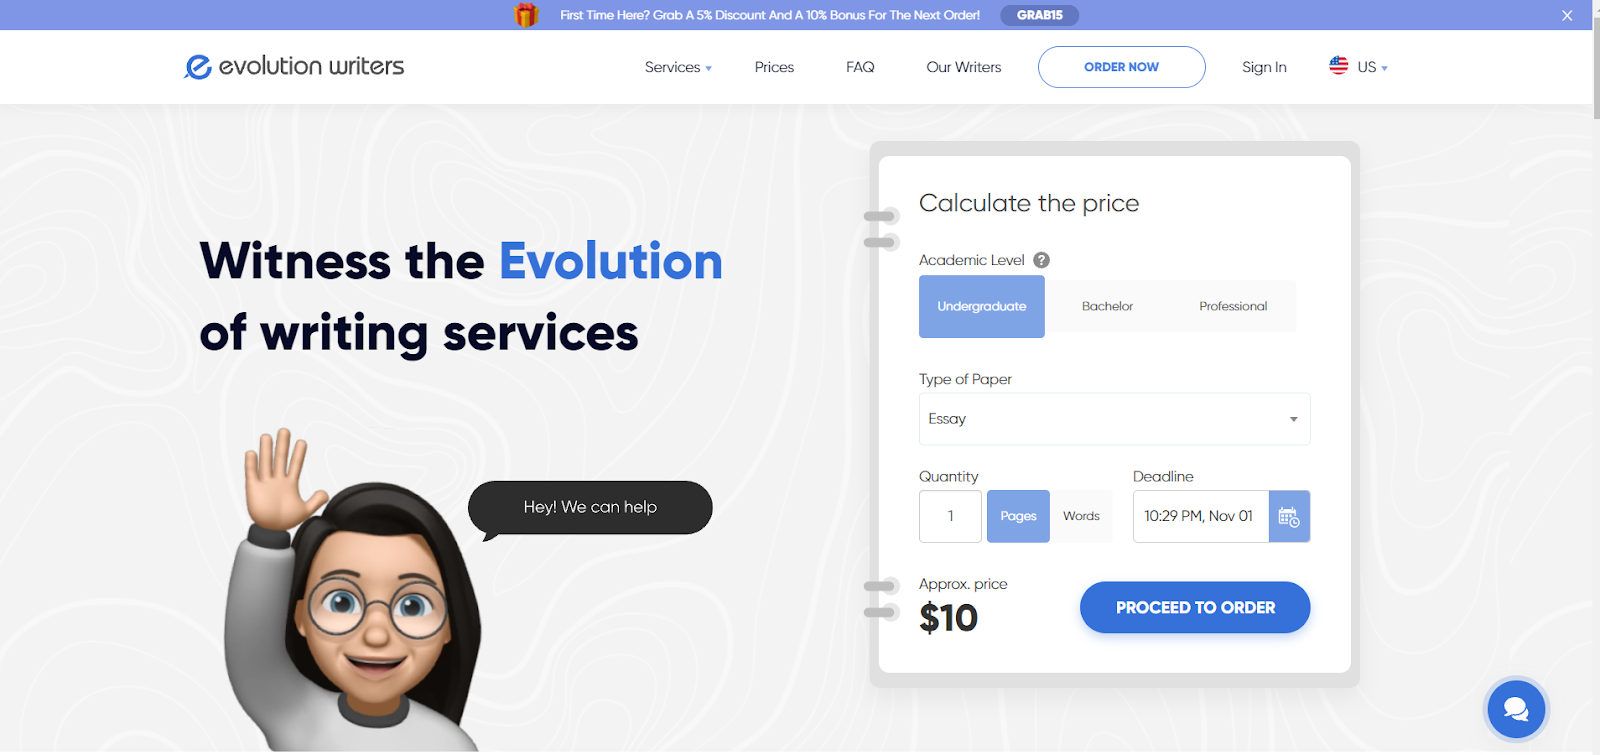 EvolutionWriters Homepage Image/Price Calculation